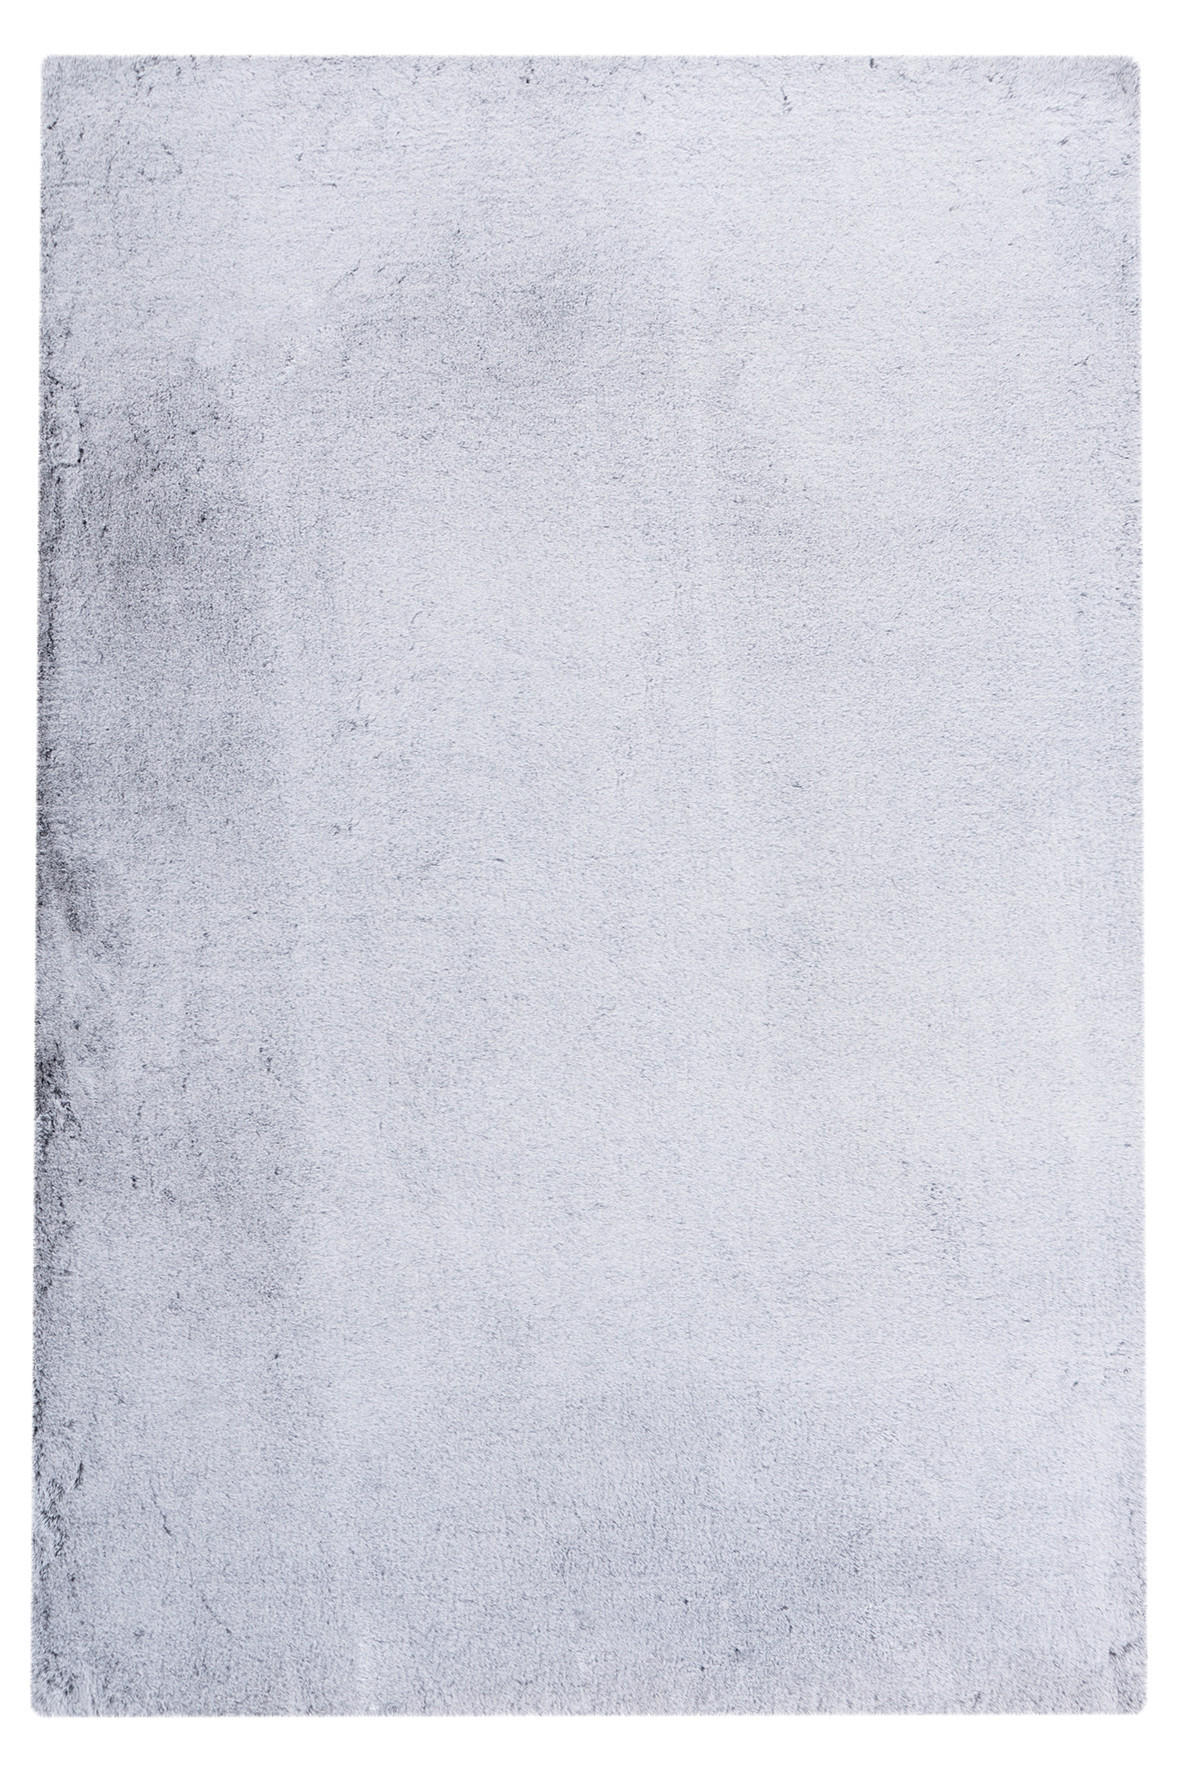 HOCHFLORTEPPICH 60/110 cm  - Grau, Basics, Textil (60/110cm) - Novel